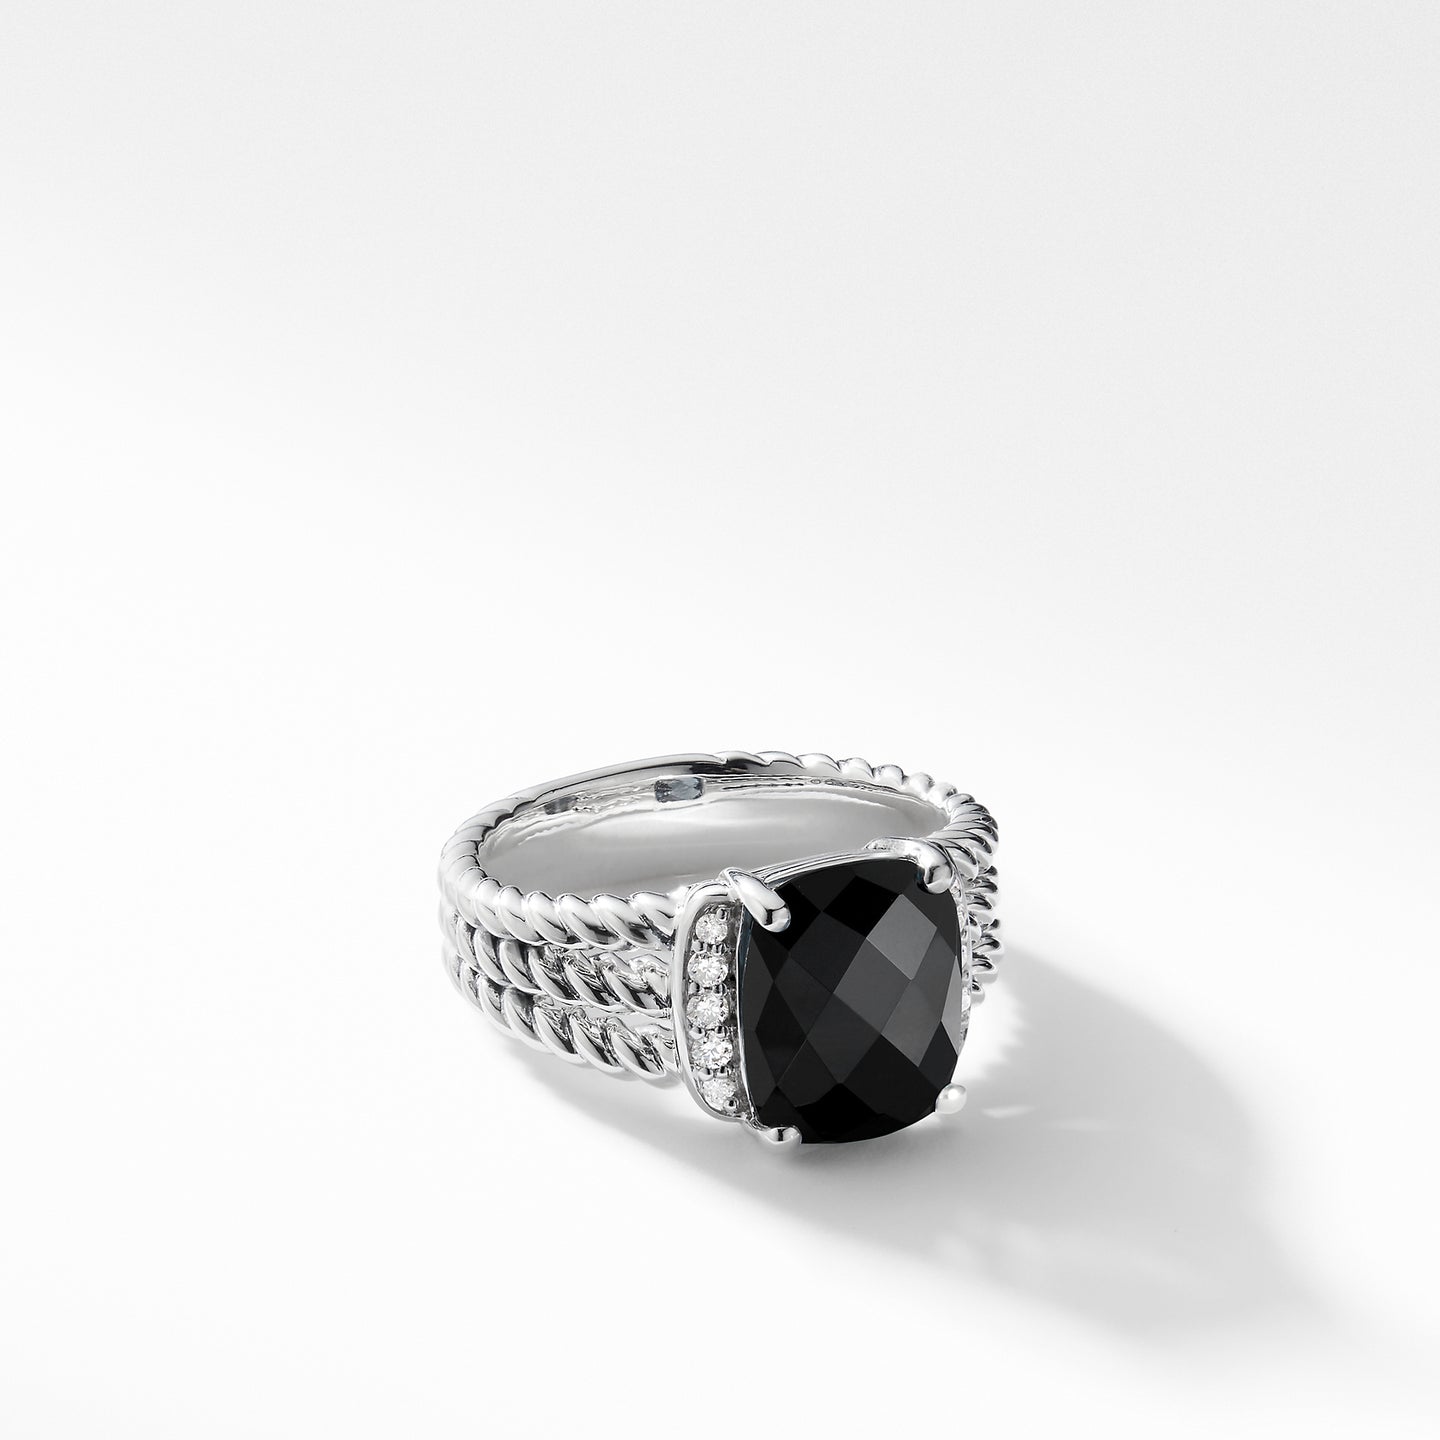 Petite Wheaton Ring with Black Onyx and Diamonds, Size 8